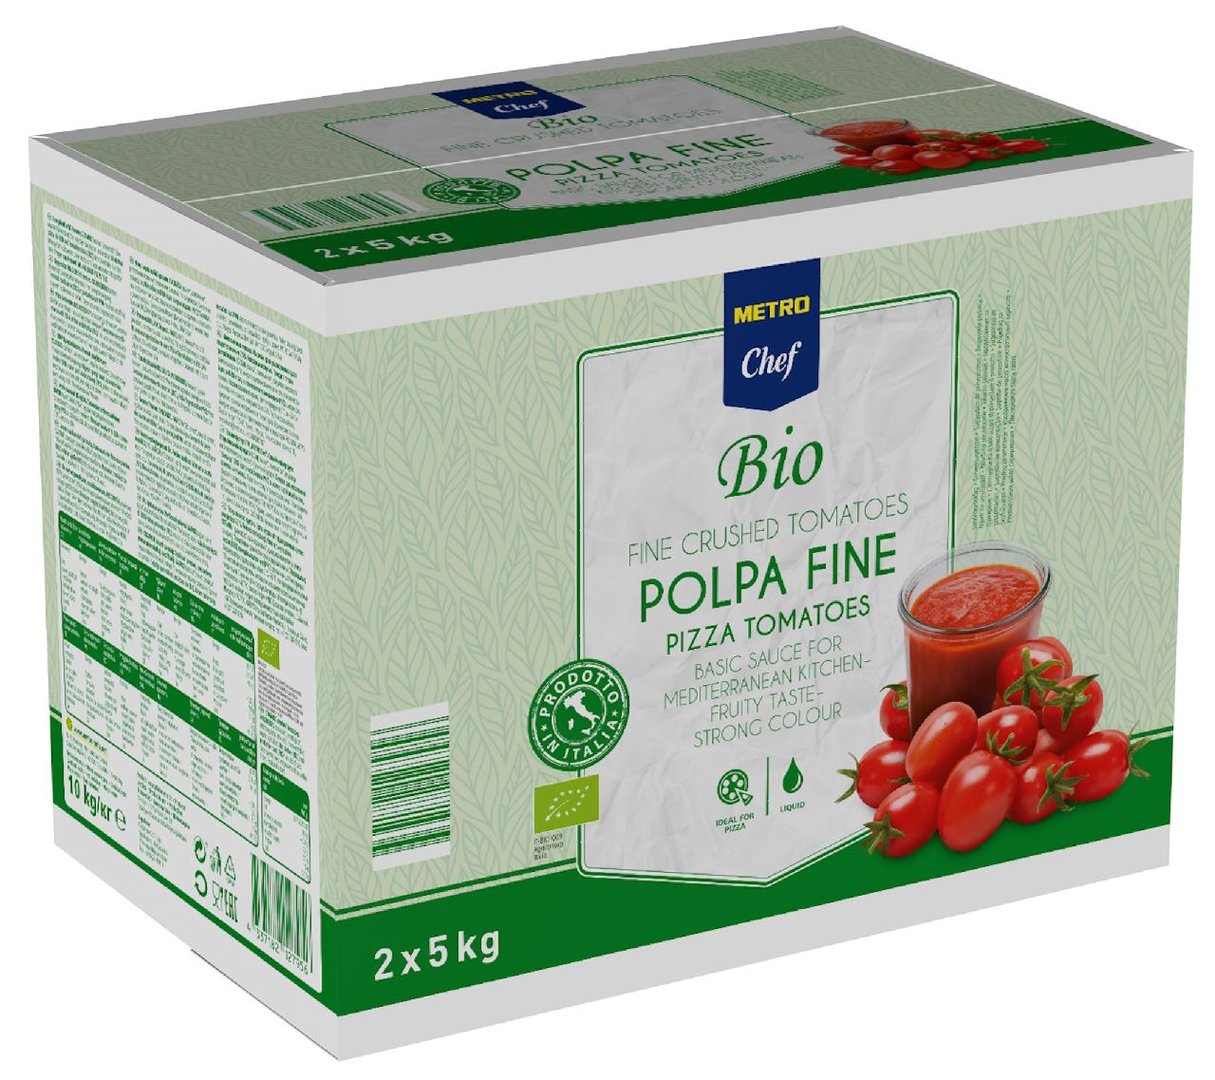 METRO Chef Bio - Polpa Fine, 2 Bag-in-Box à 5 kg - 10 kg Karton